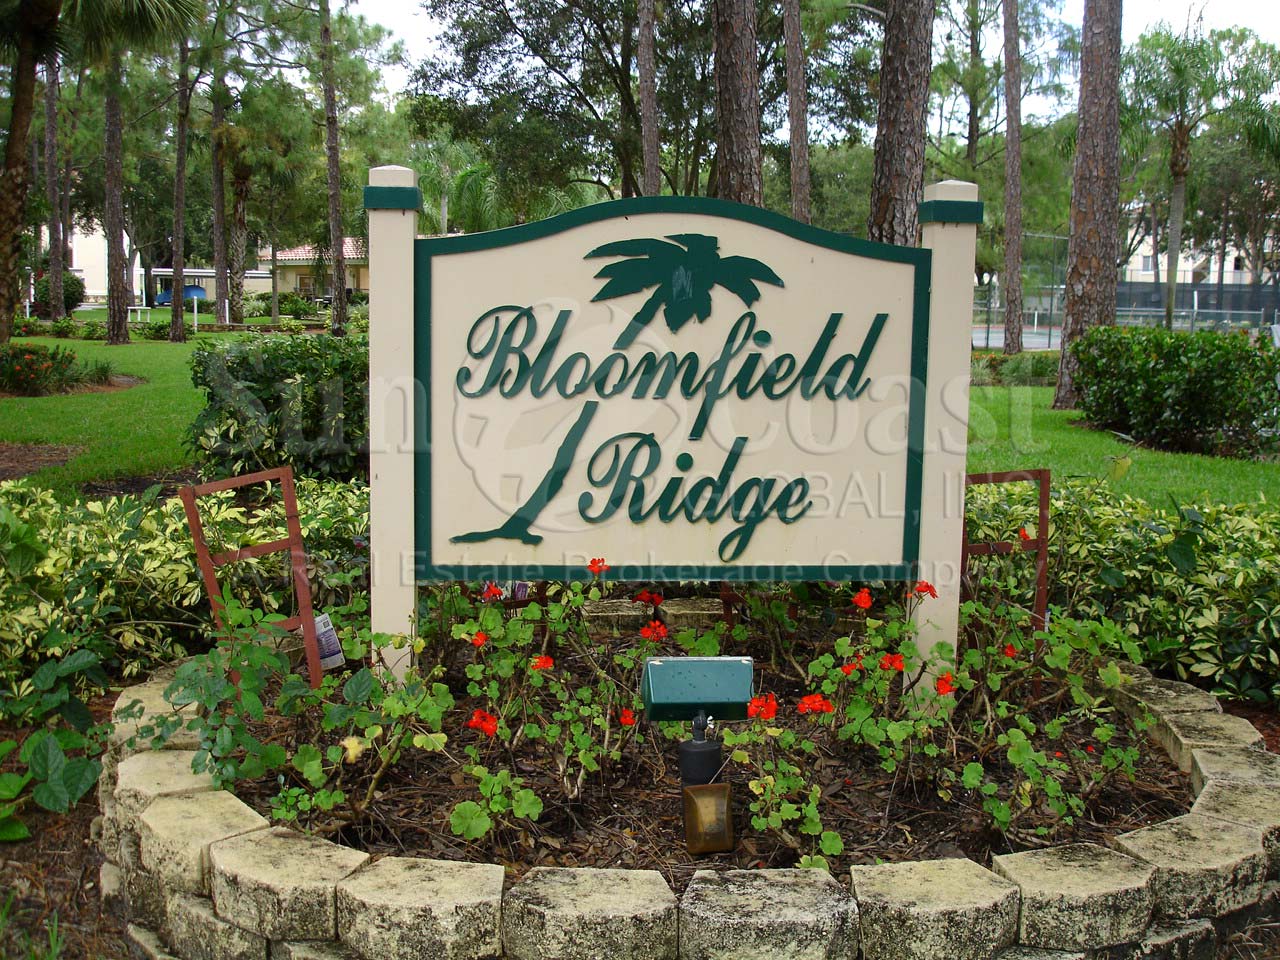 Bloomfield Ridge signage